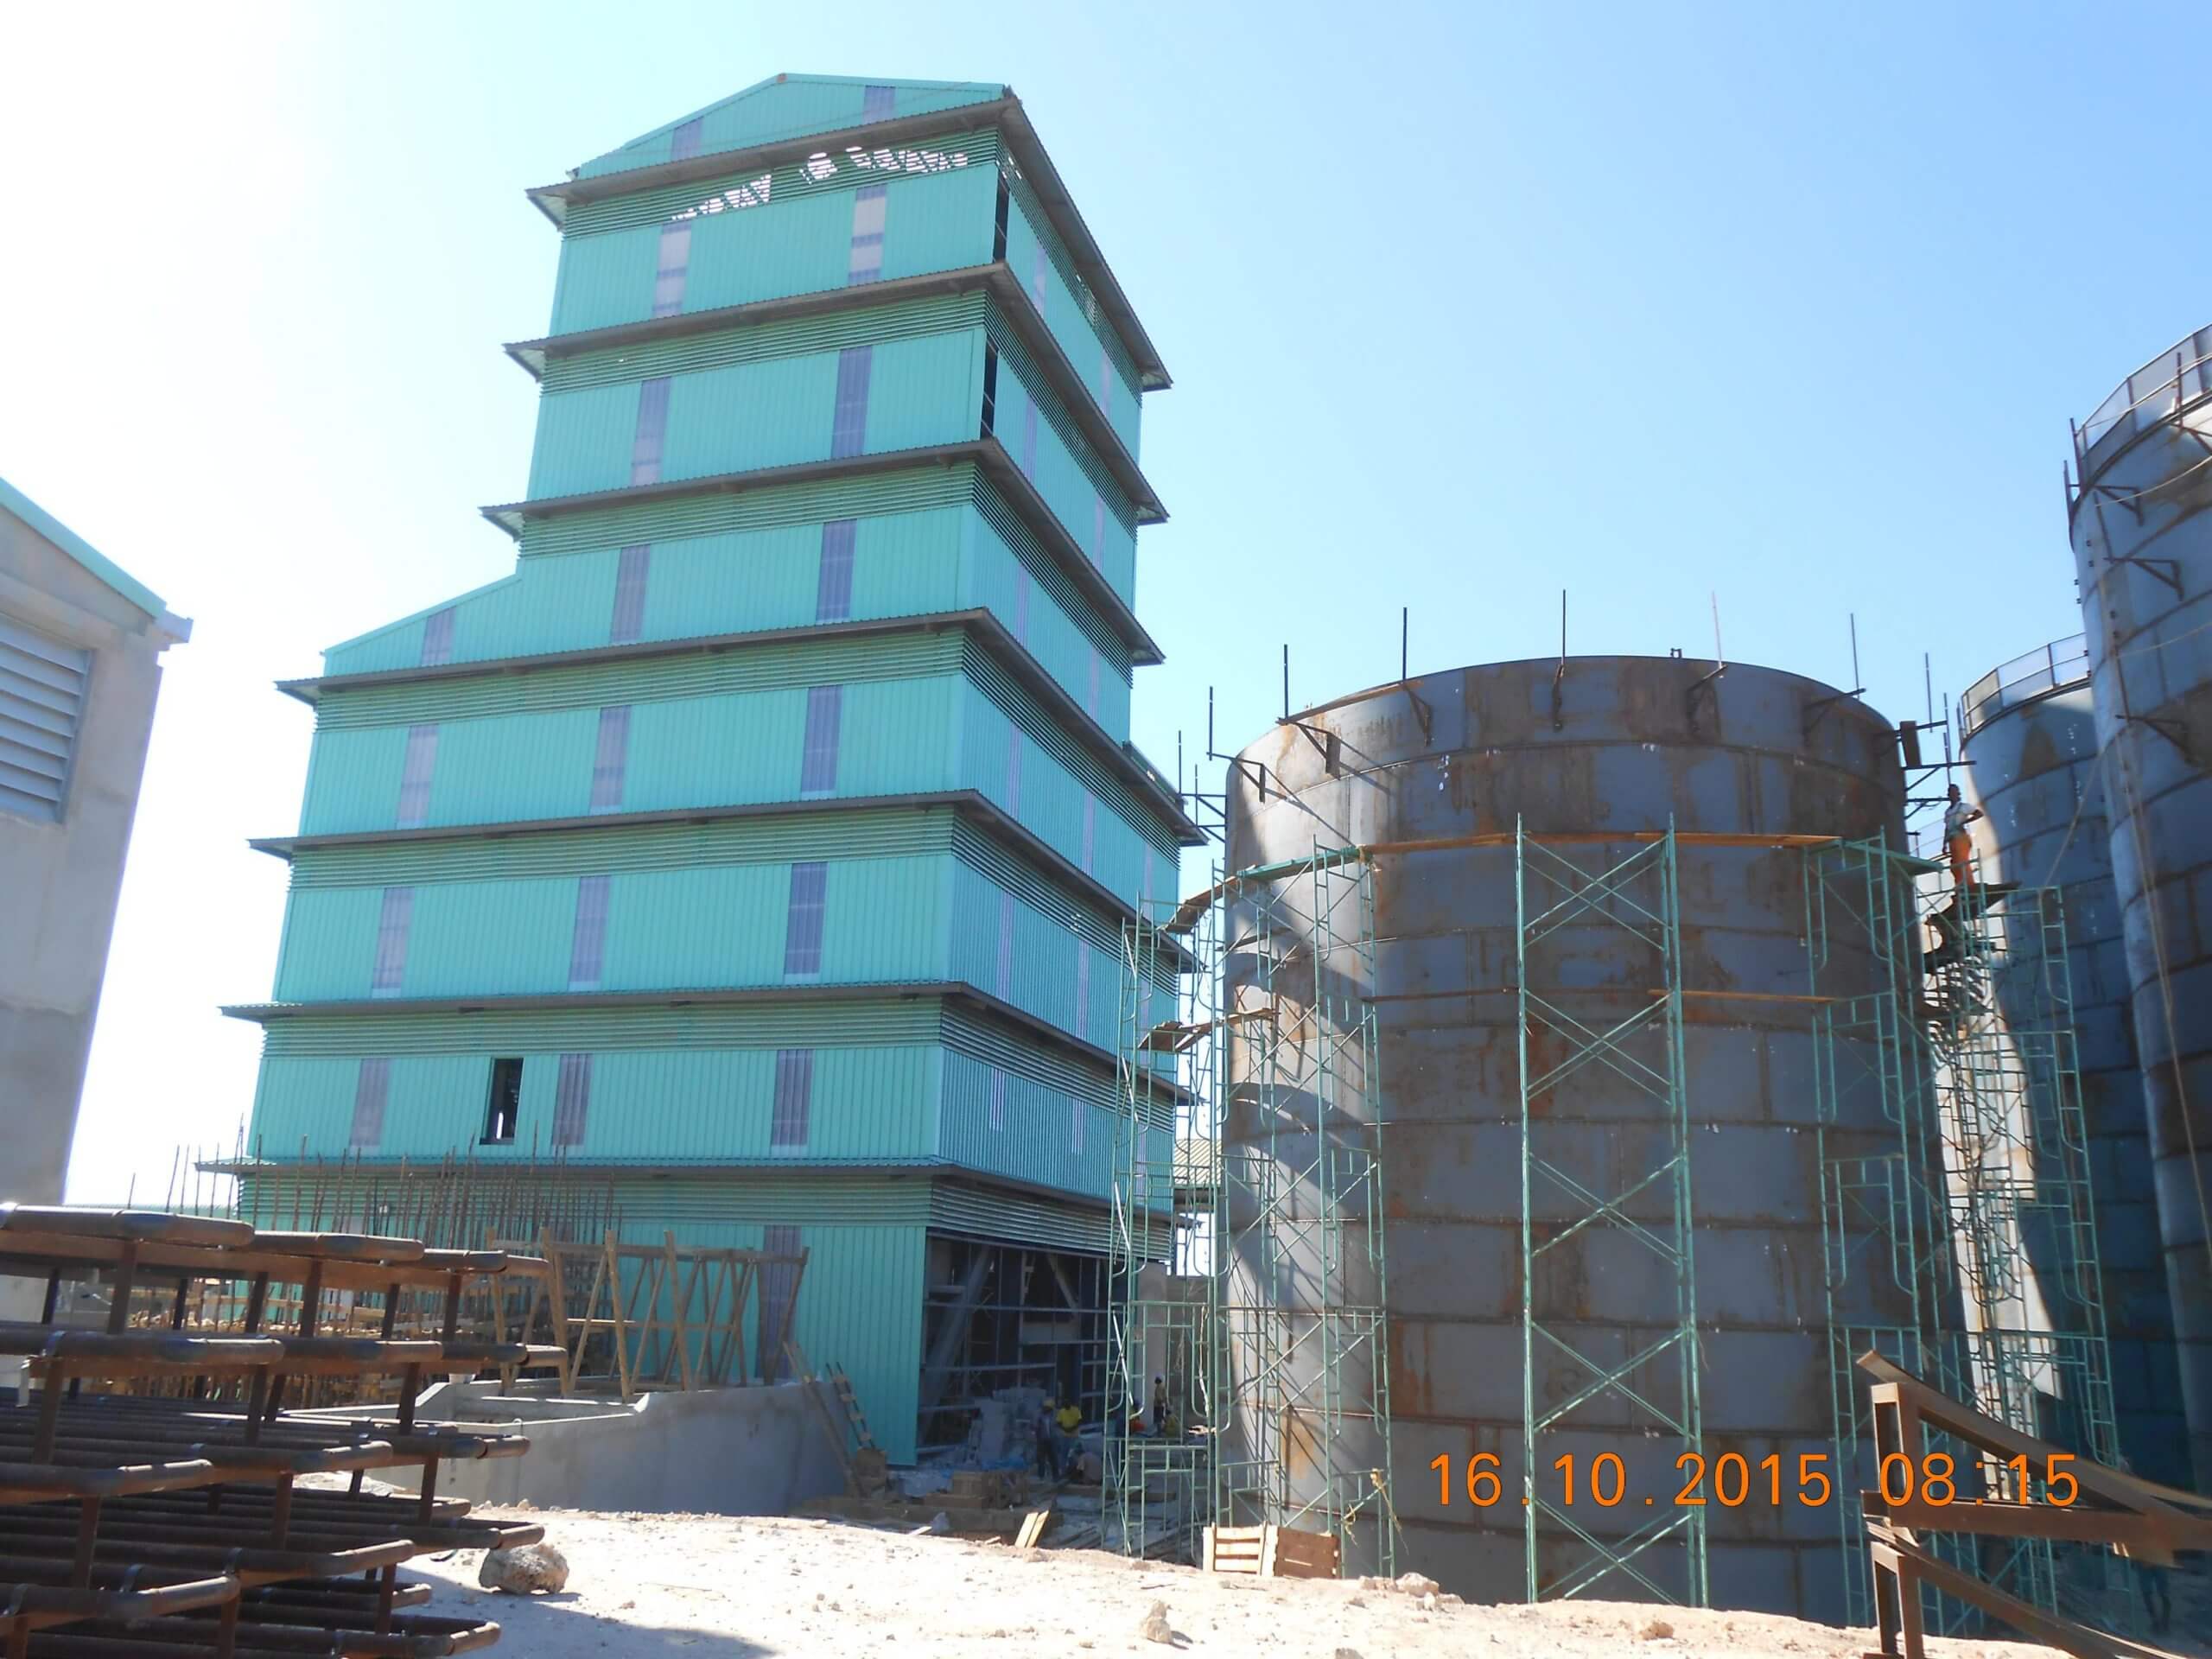 SSS4412 -Plant for Oil Refineries Ltd.Majunga,Madagascar2015